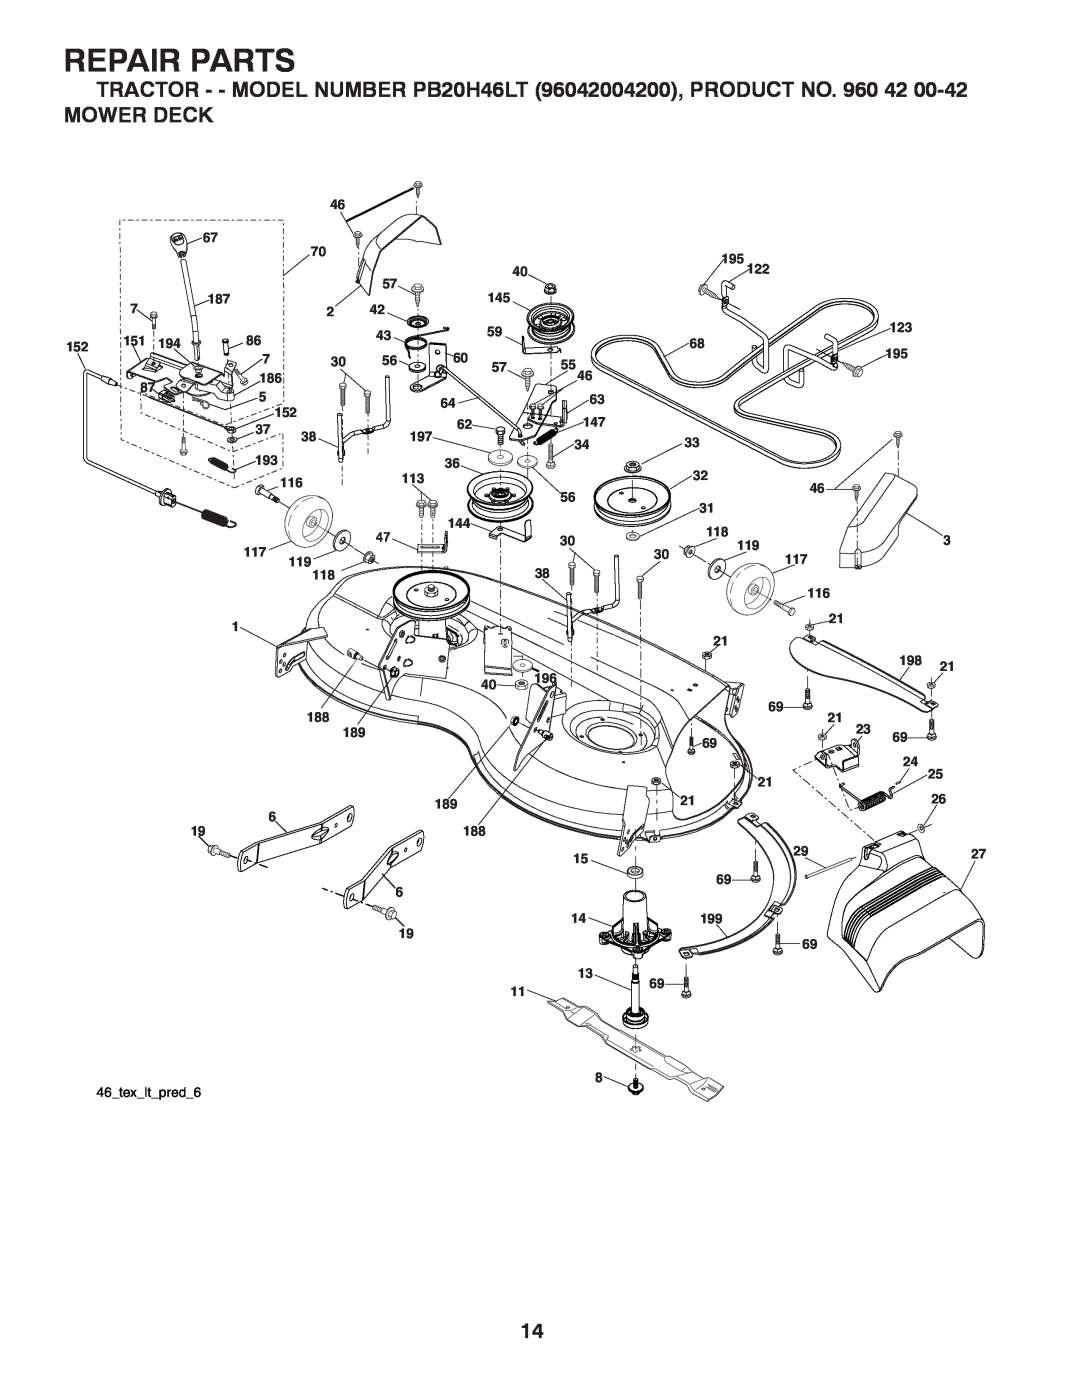 Poulan manual Mower Deck, Repair Parts, TRACTOR - - MODEL NUMBER PB20H46LT 96042004200, PRODUCT NO. 960, 46texltpred6 